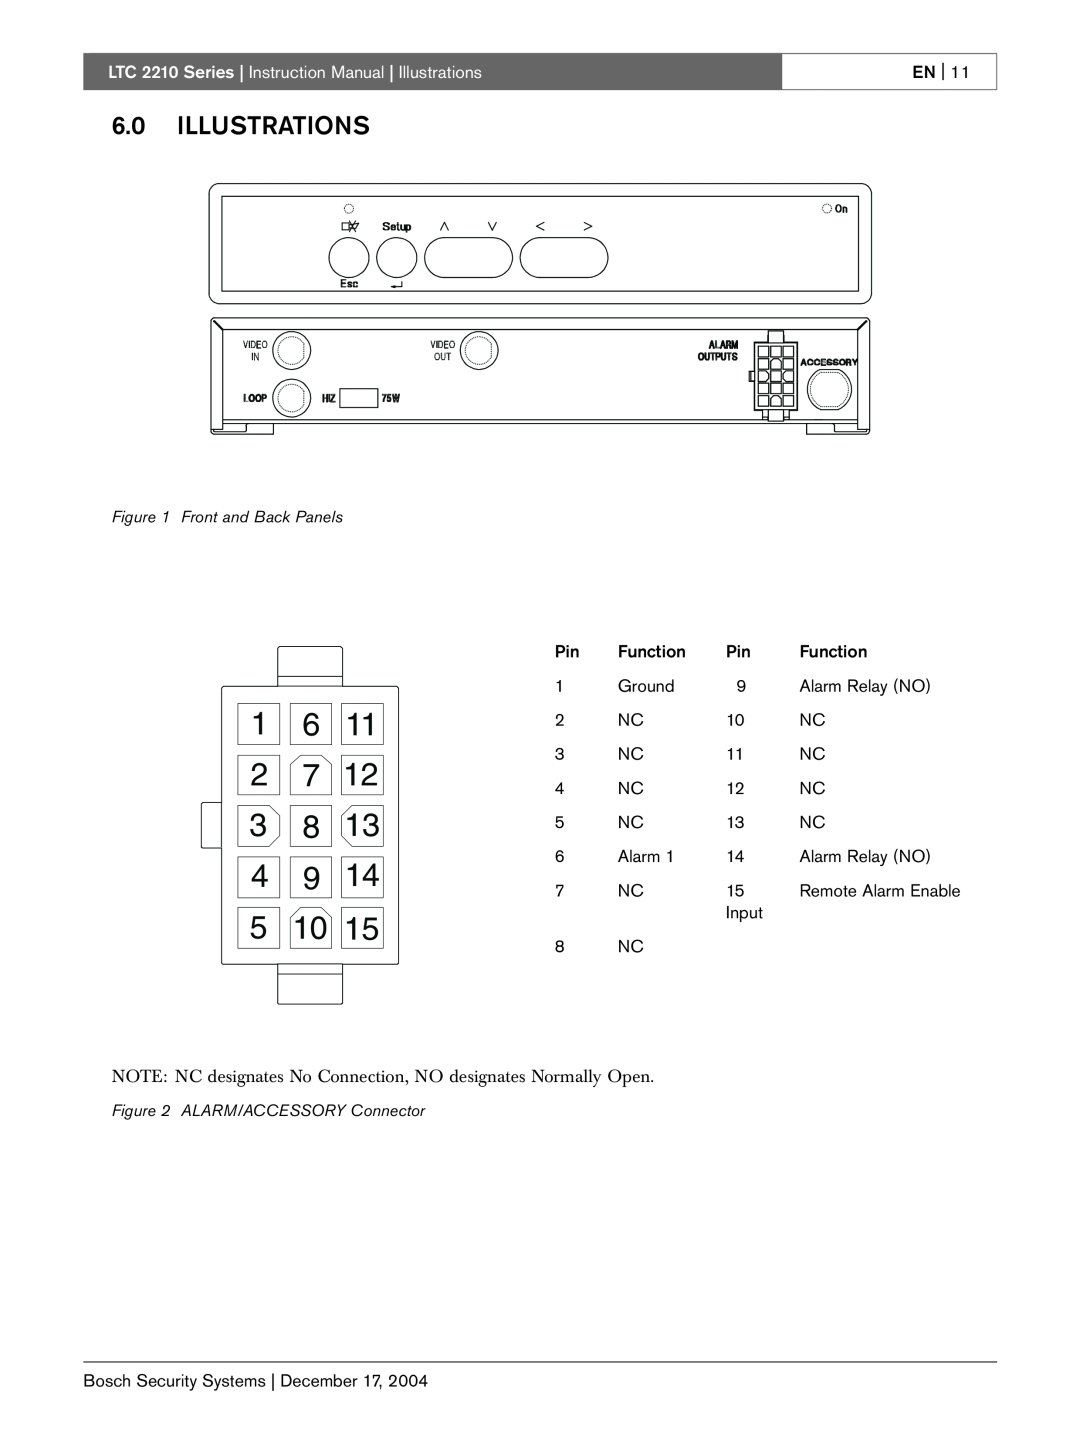 Bosch Appliances LTC 2210 instruction manual 6.0ILLUSTRATIONS, 16 27 3, En 